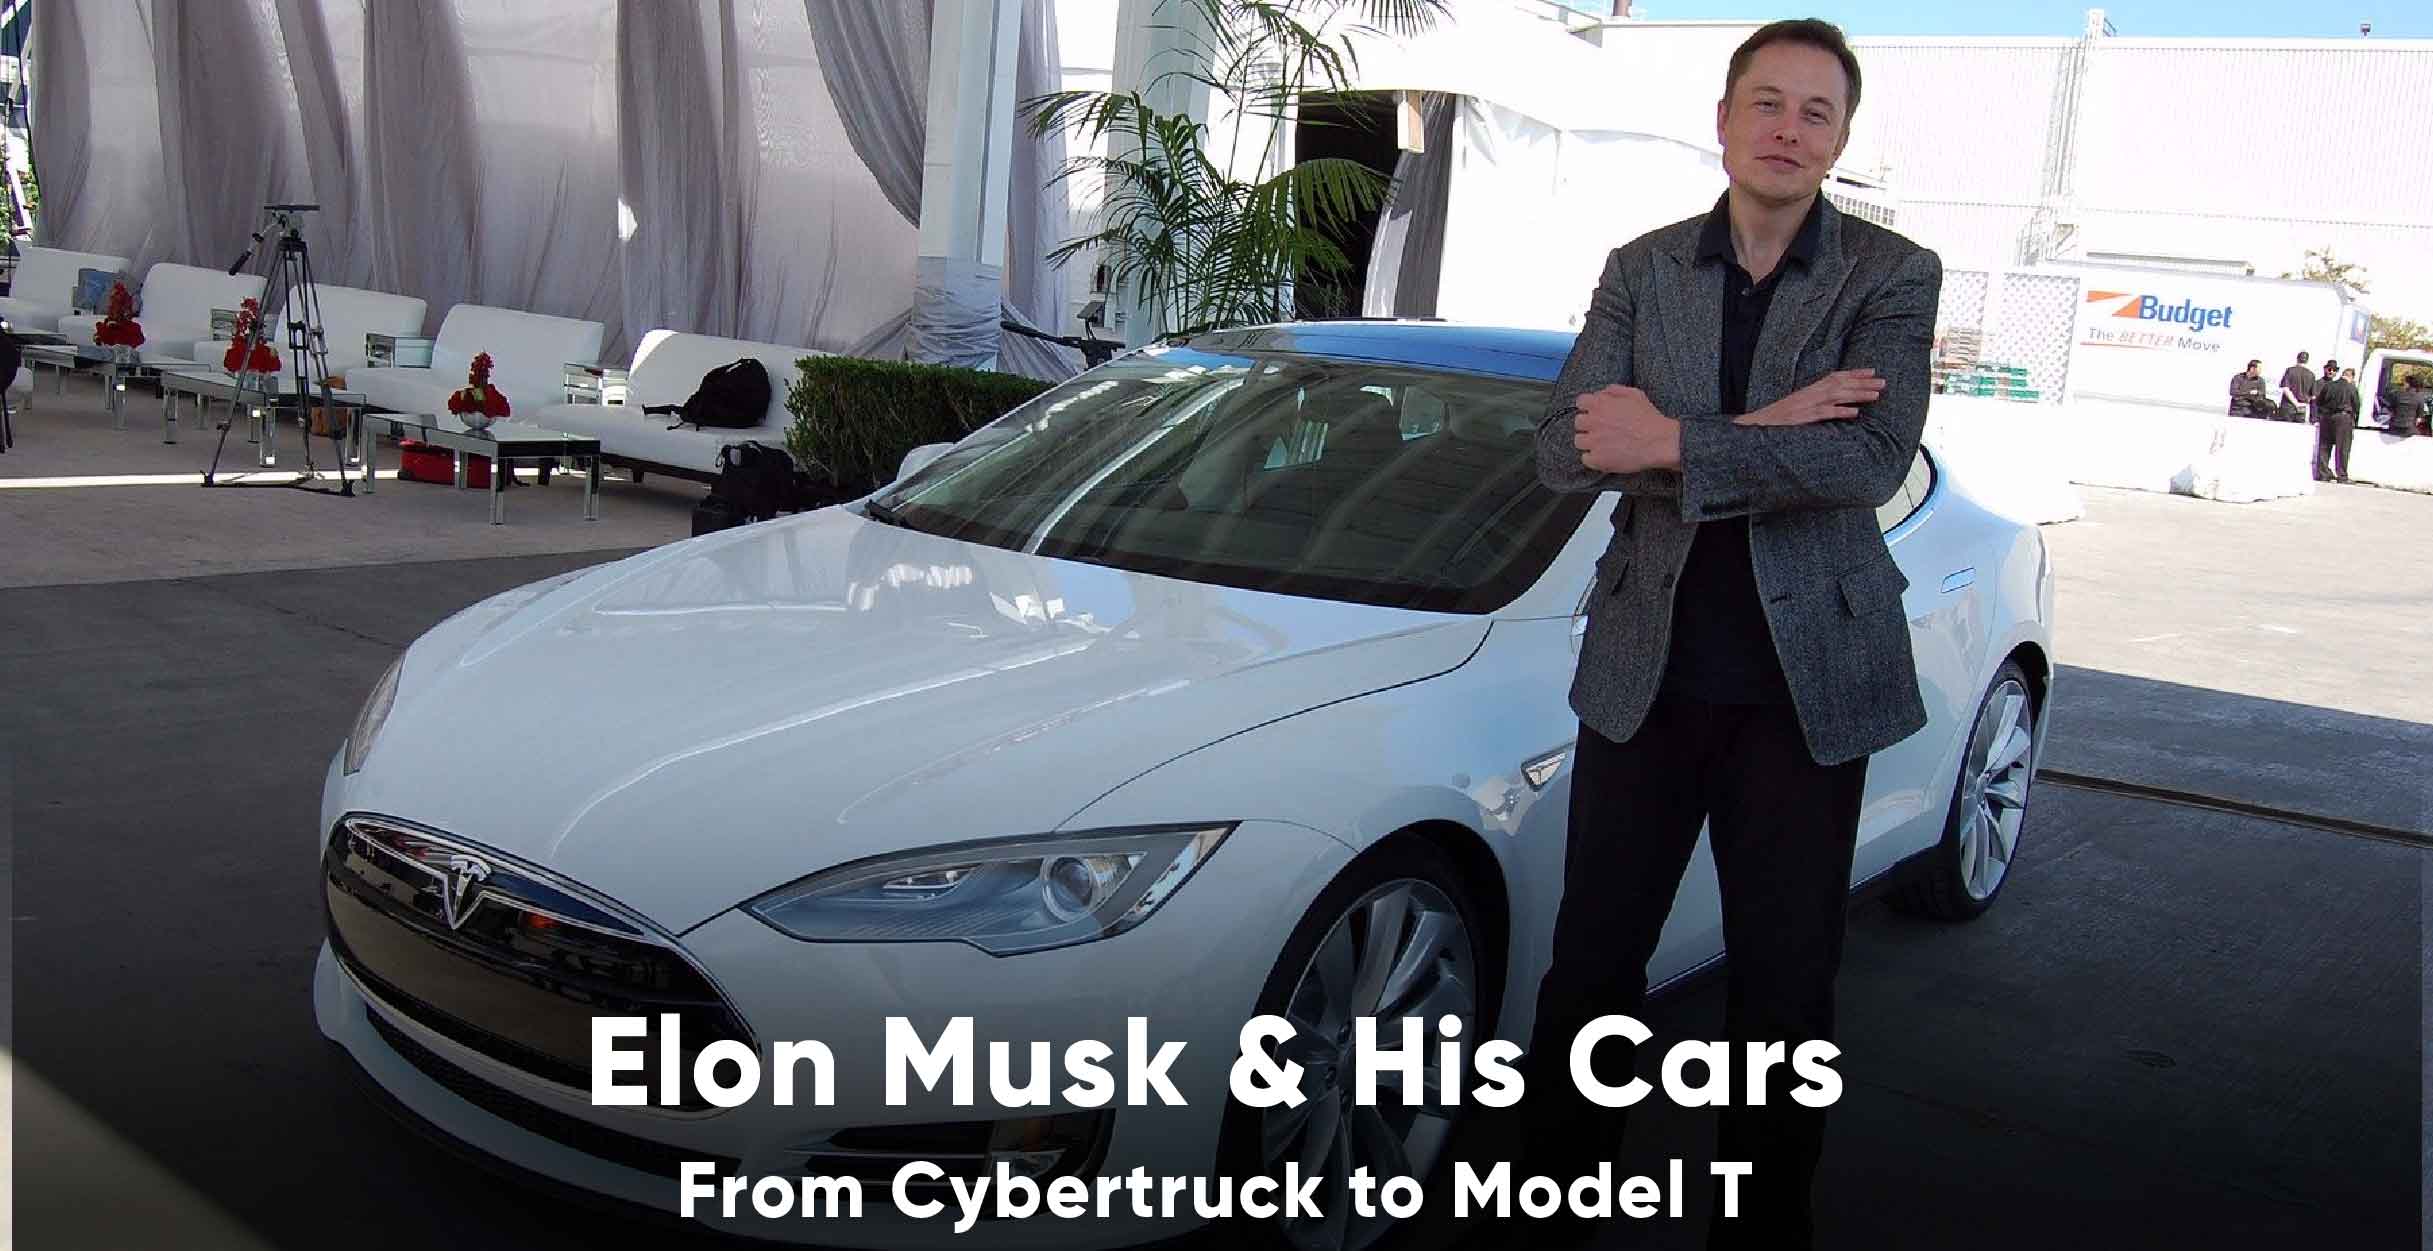 Elon Musk Car Collection